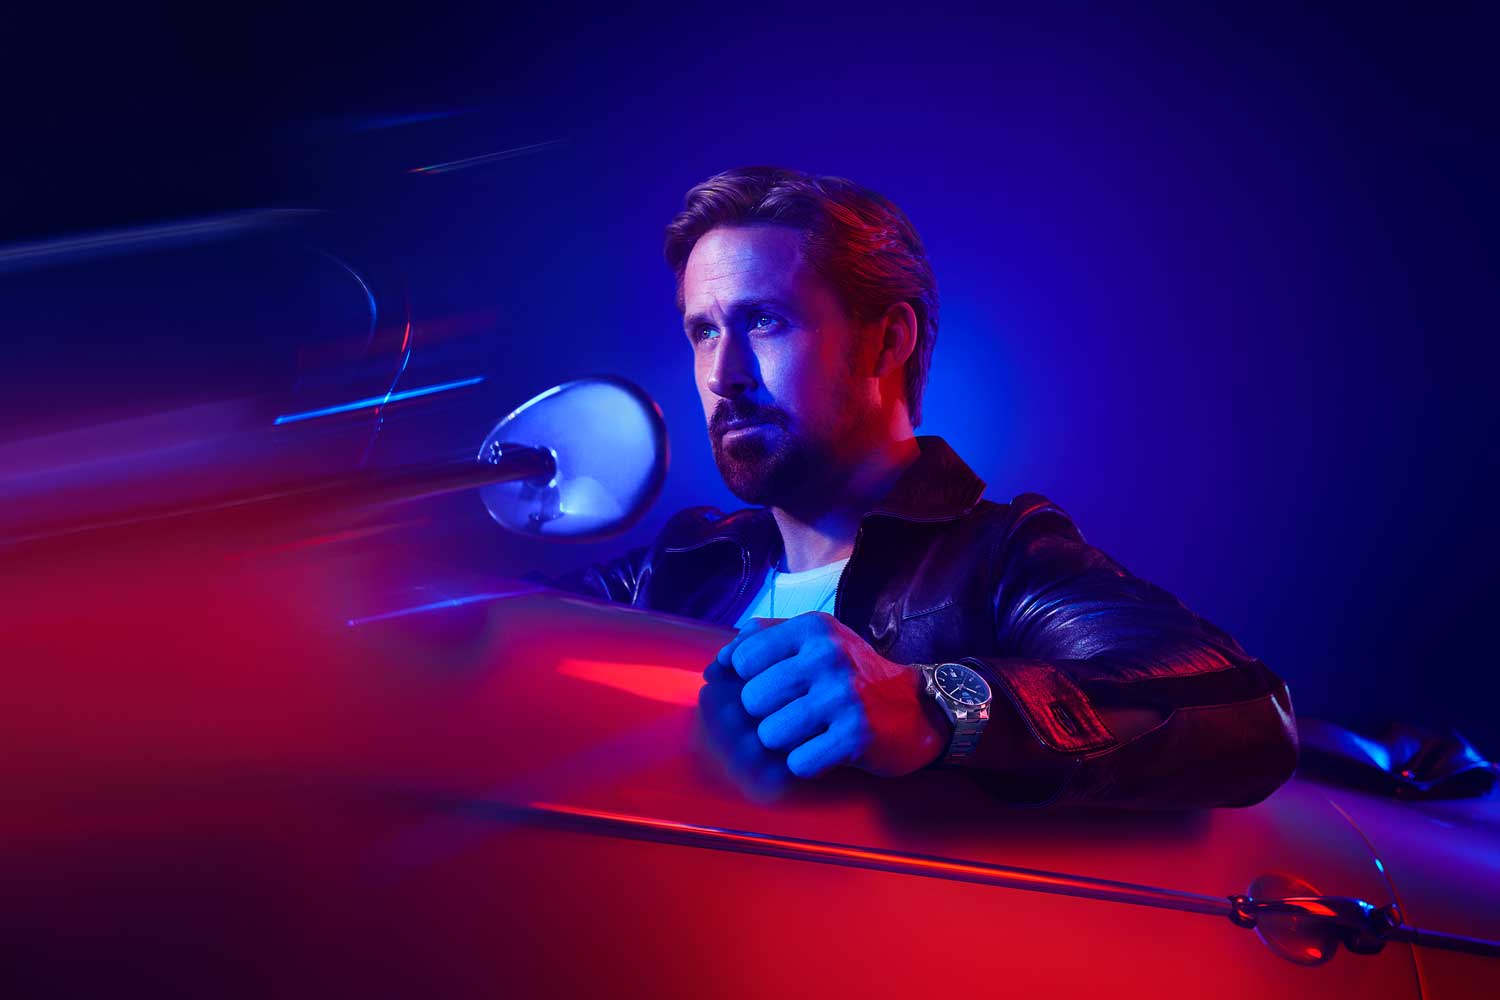 Ryan Gosling, TAG Heuer's latest brand ambassador